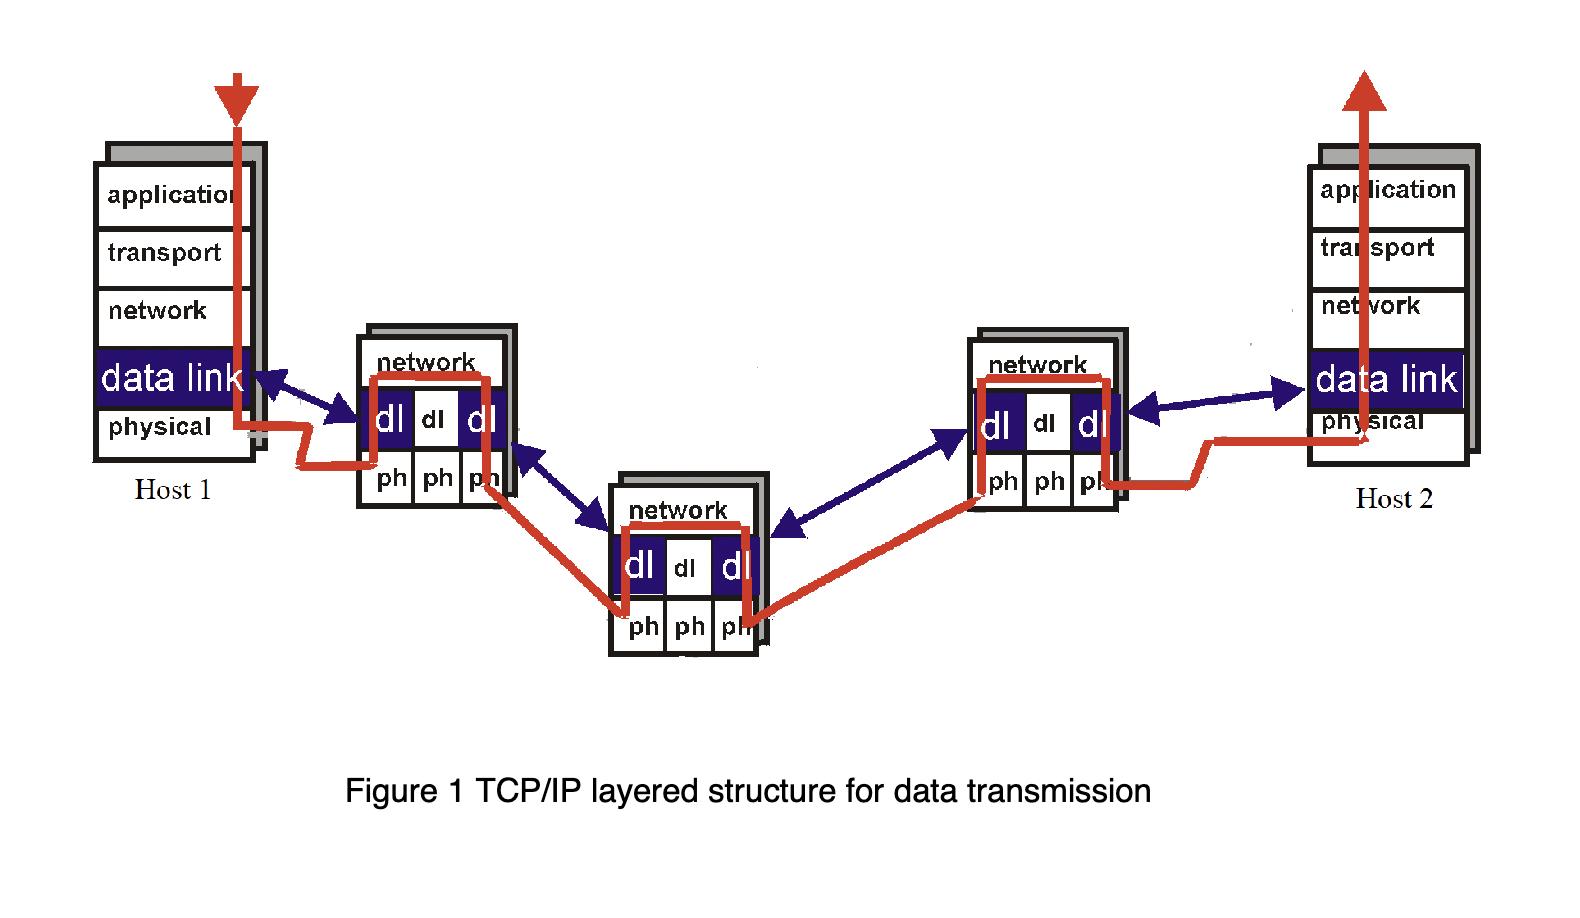 application transport network data link physical Host 1 network dl di dl ph|ph|p1| network dl di dl ph|ph|ph.